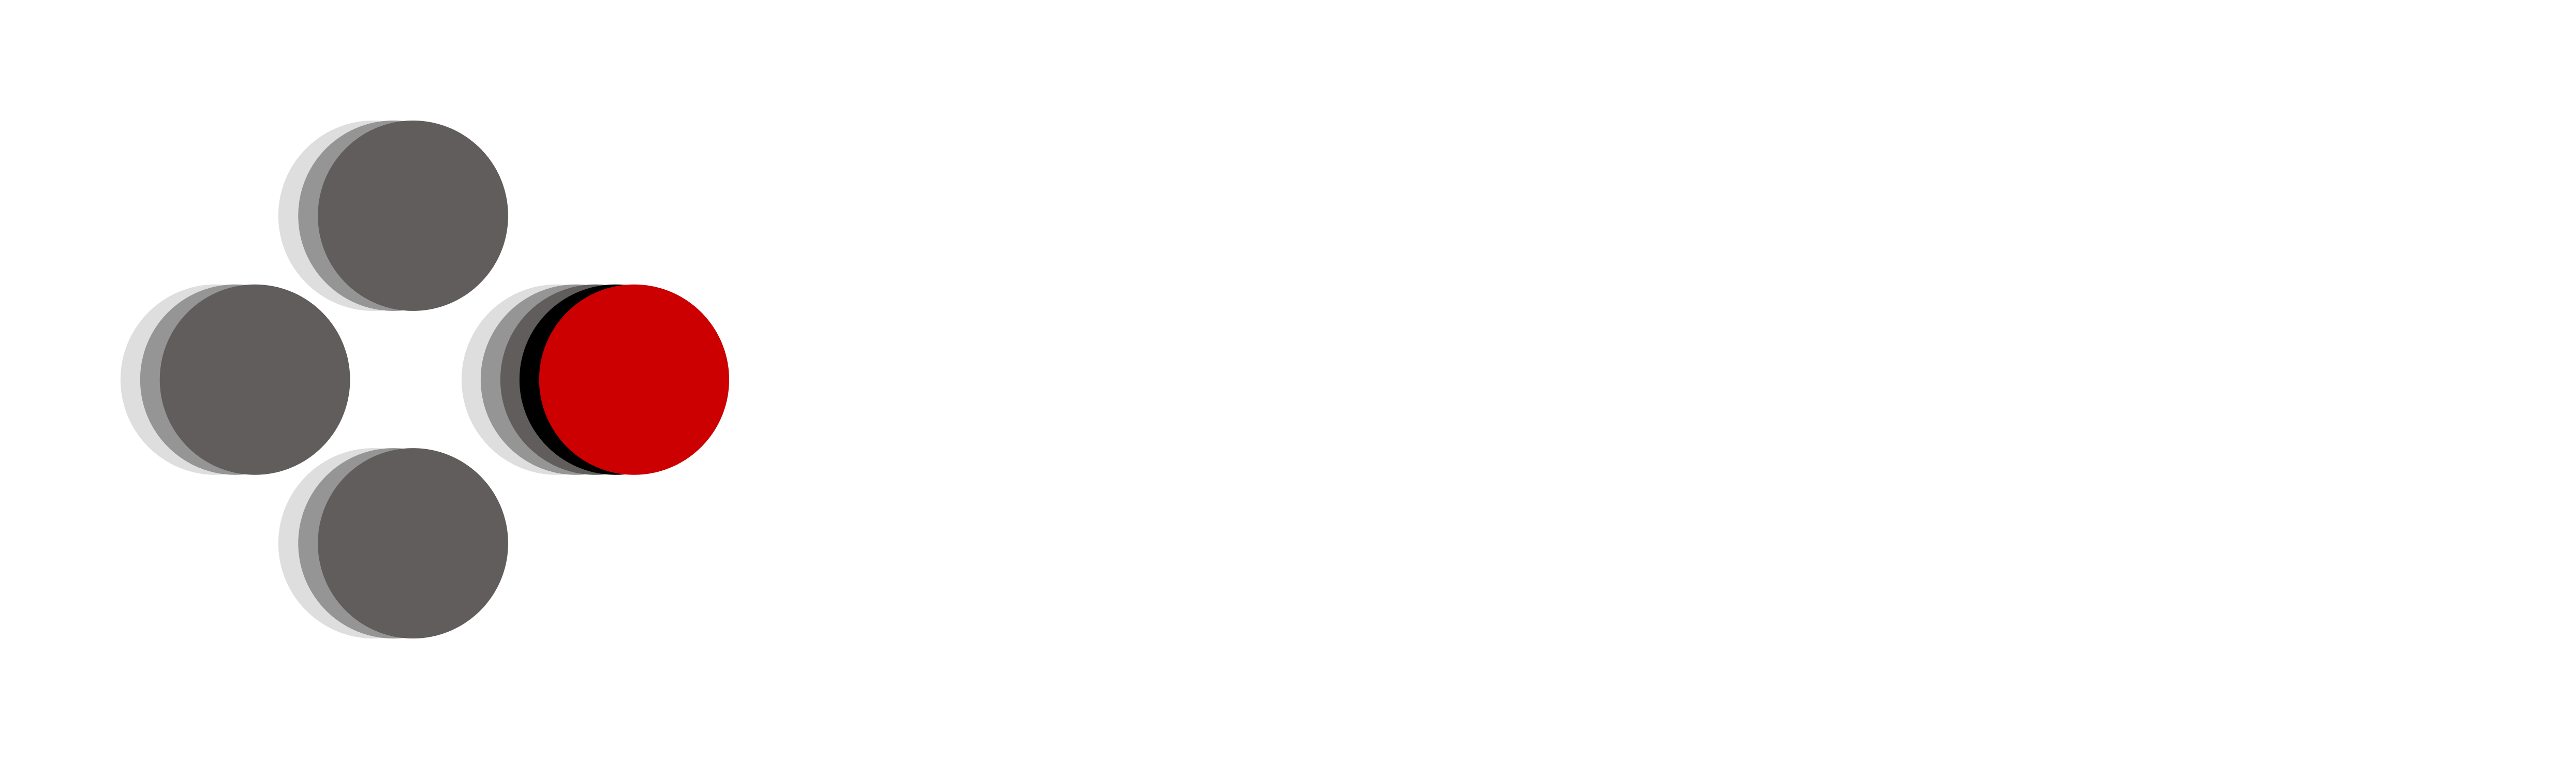 Tonadro.com Logo